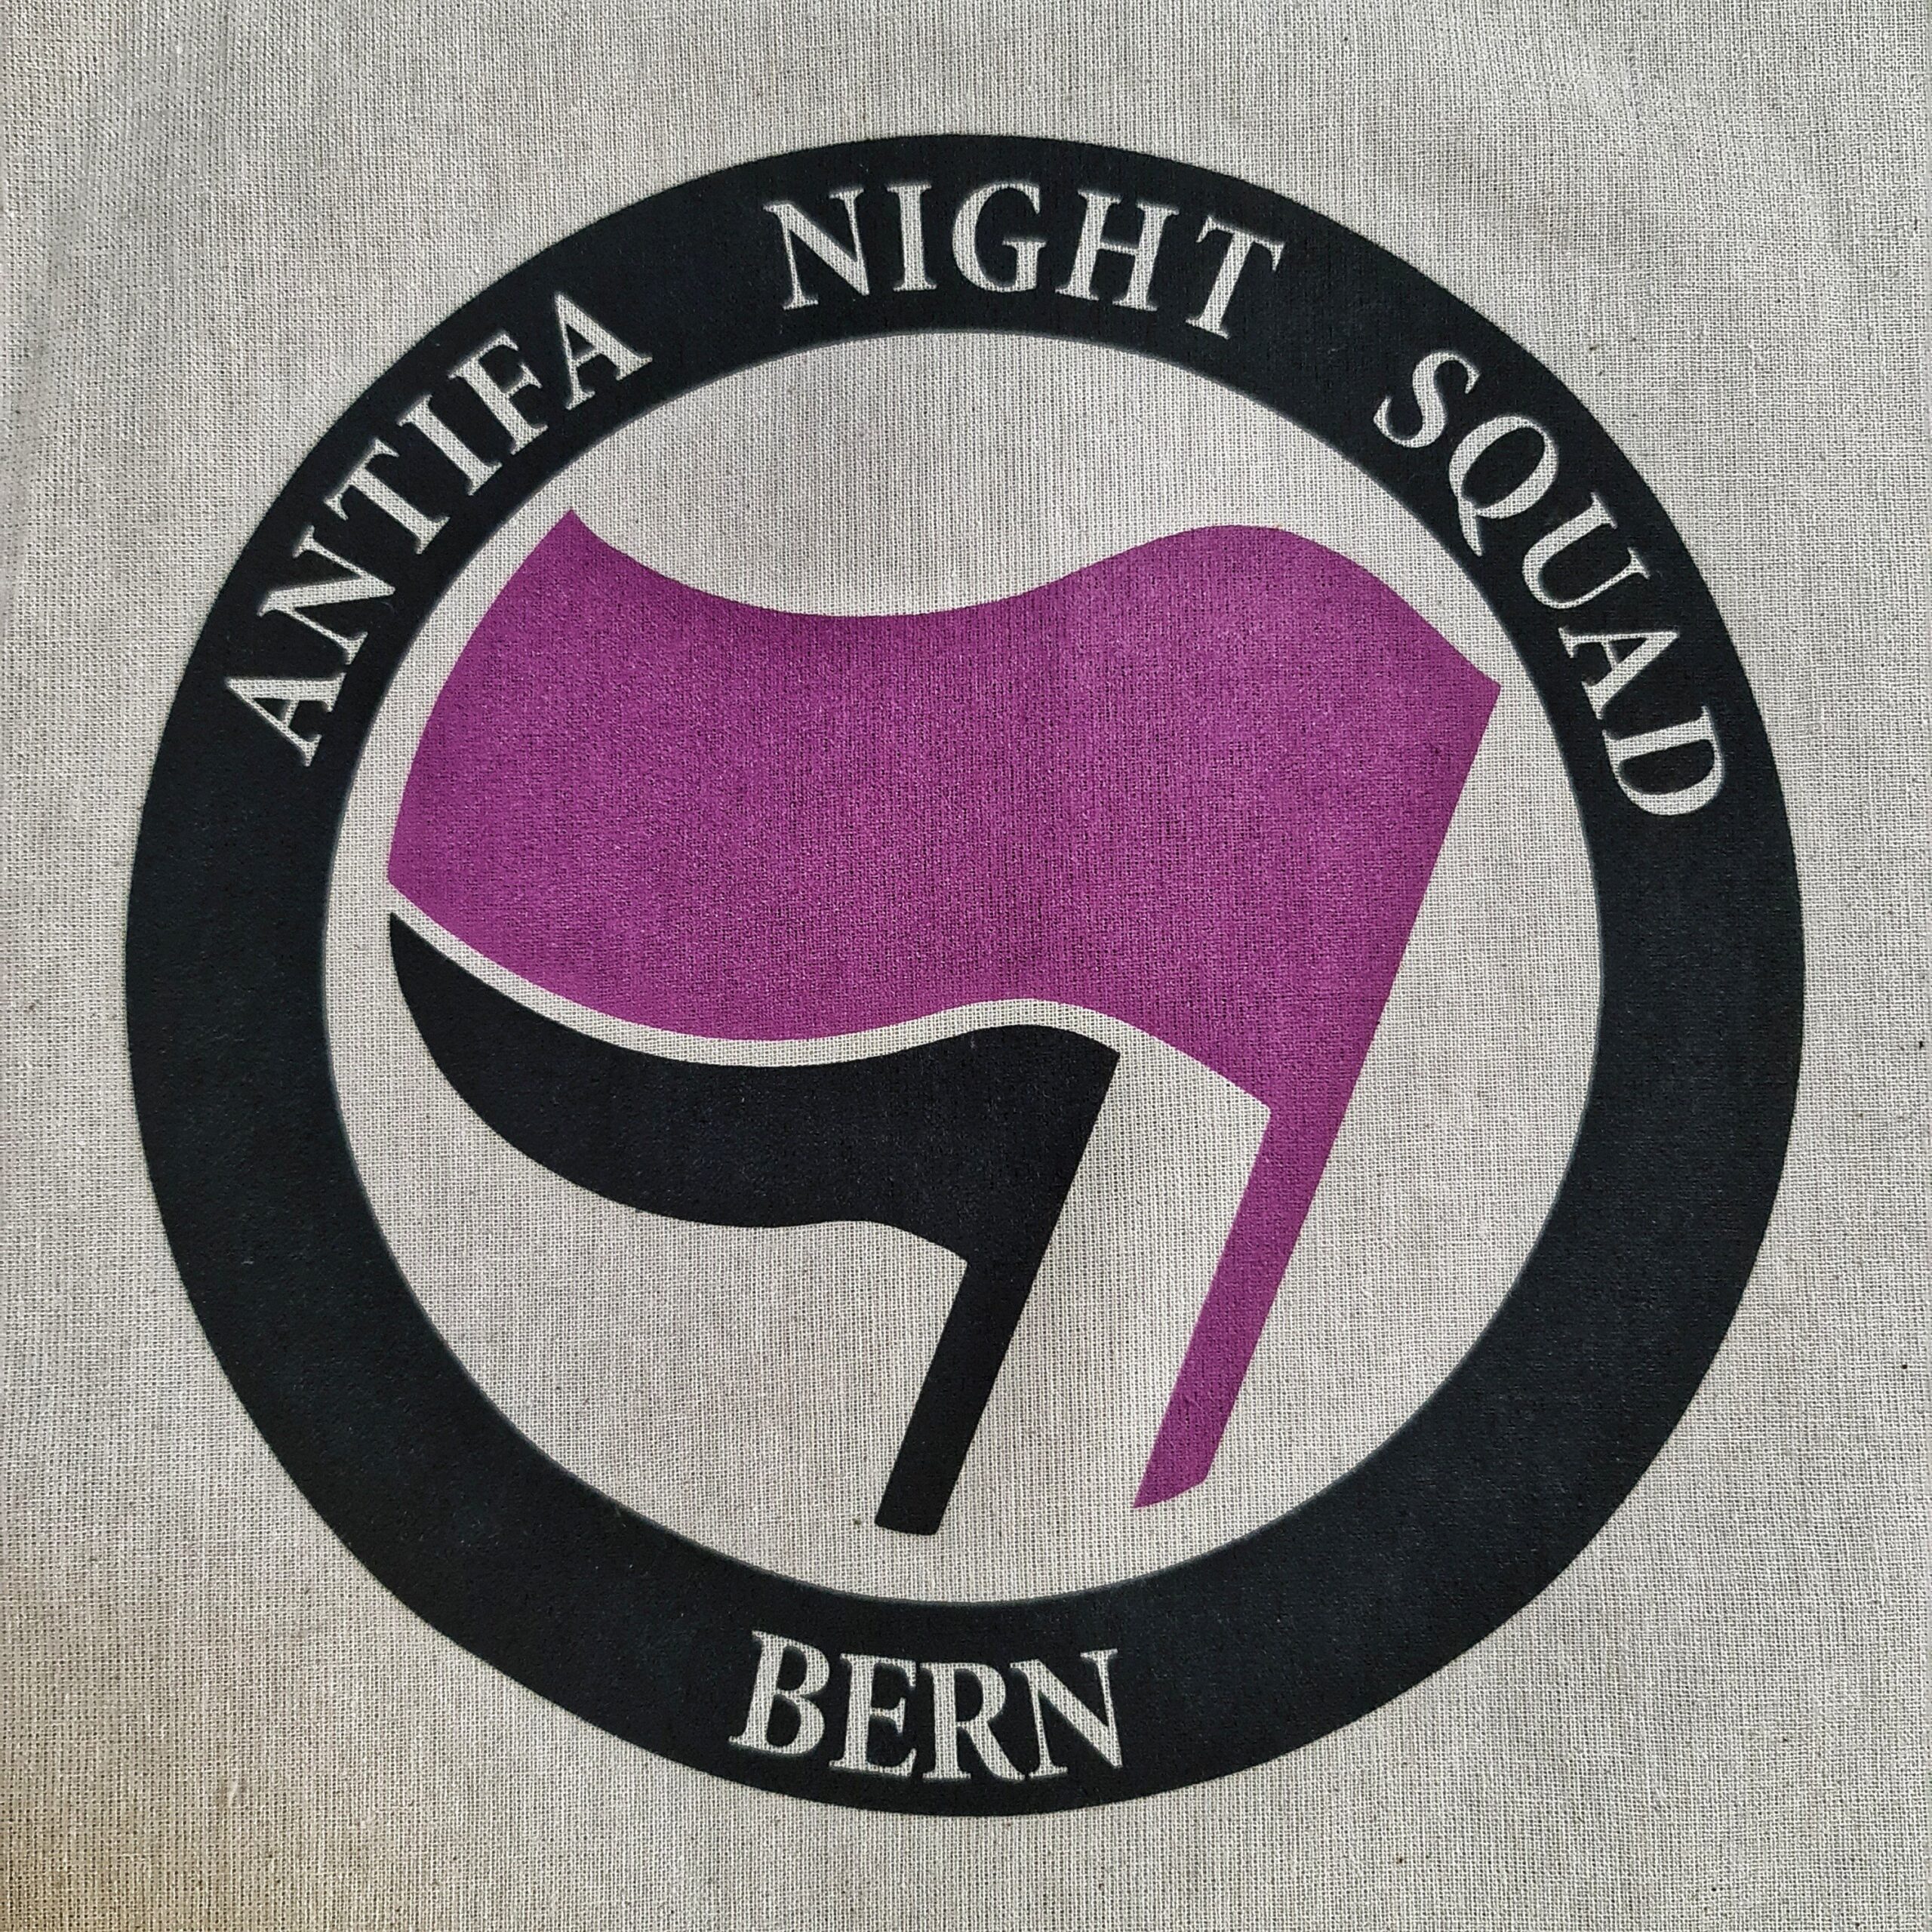 Antifa Night Squad